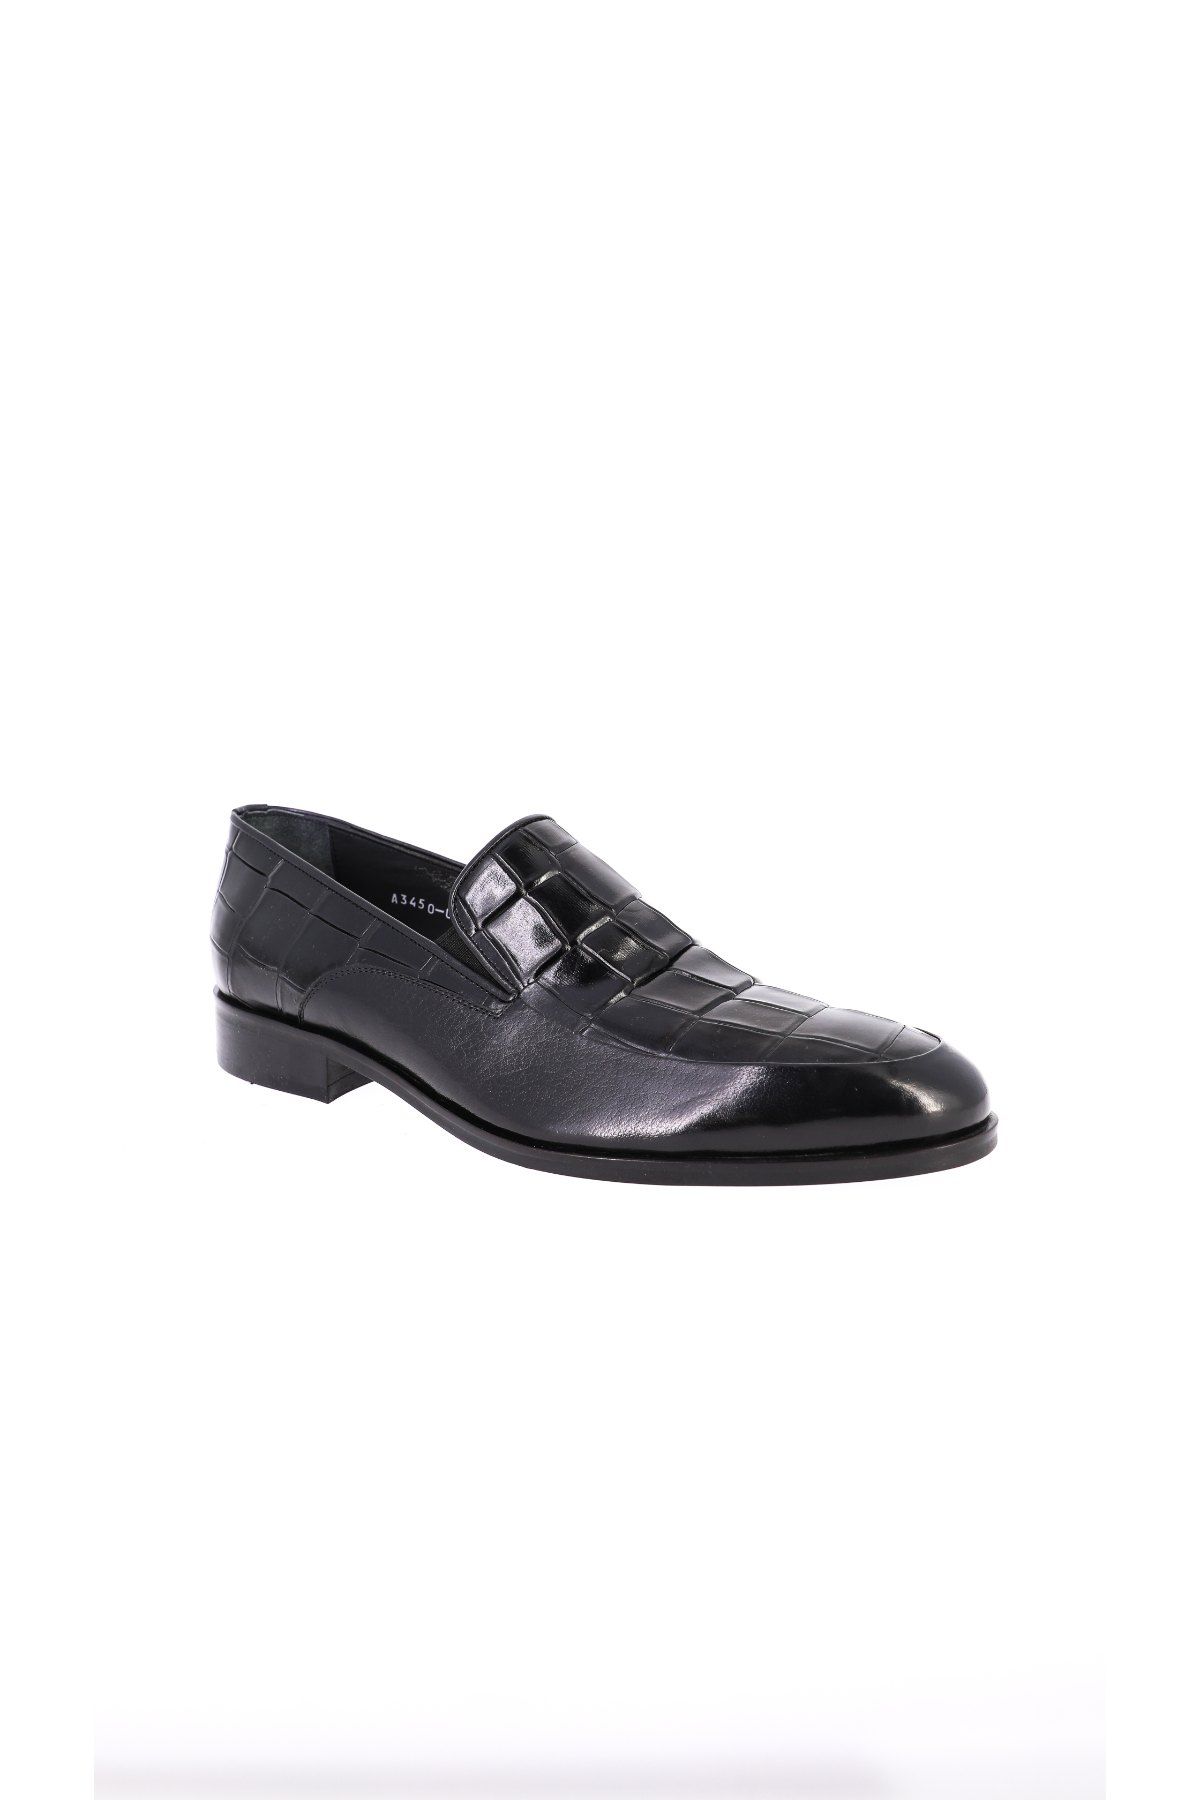 GUARDI YEDILI A3450-08 BLACK Men Classic Shoes | Dosso Dossi